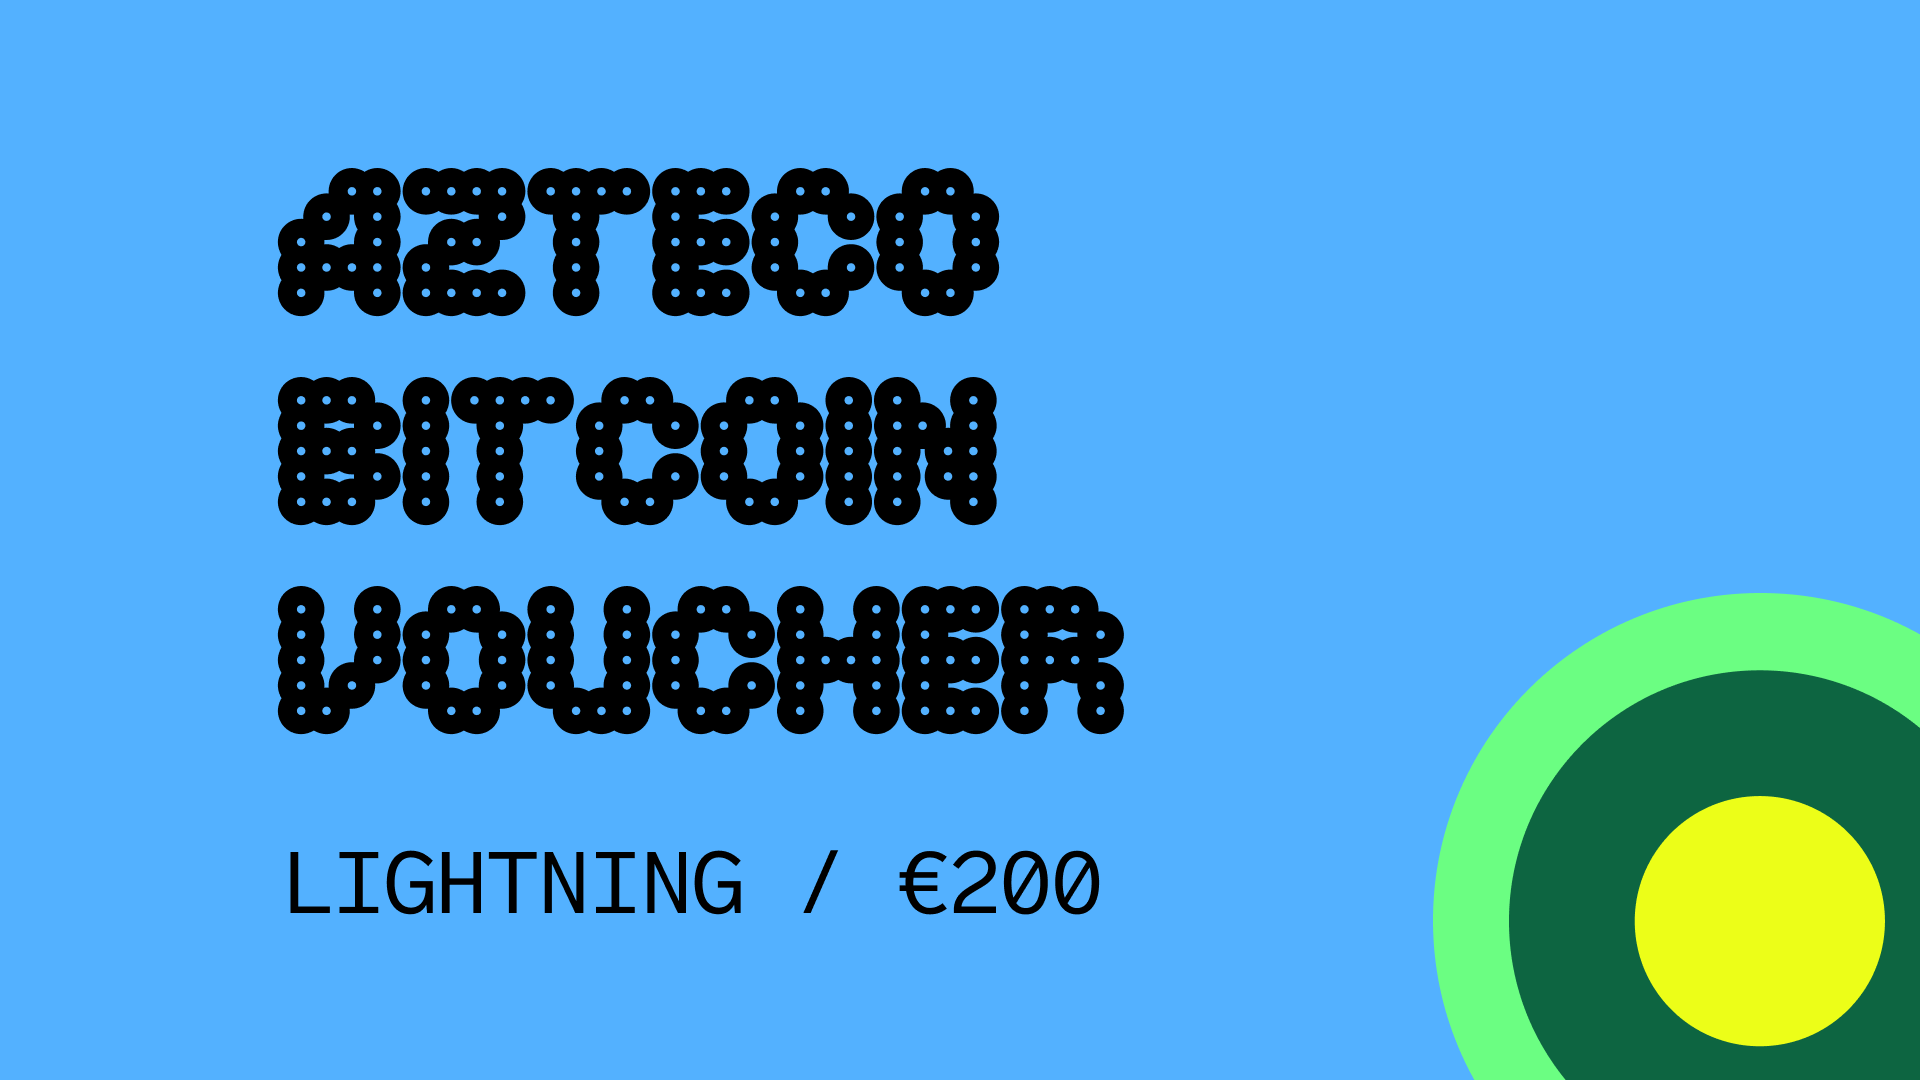 Azteco Bitcoin Lighting €200 Voucher